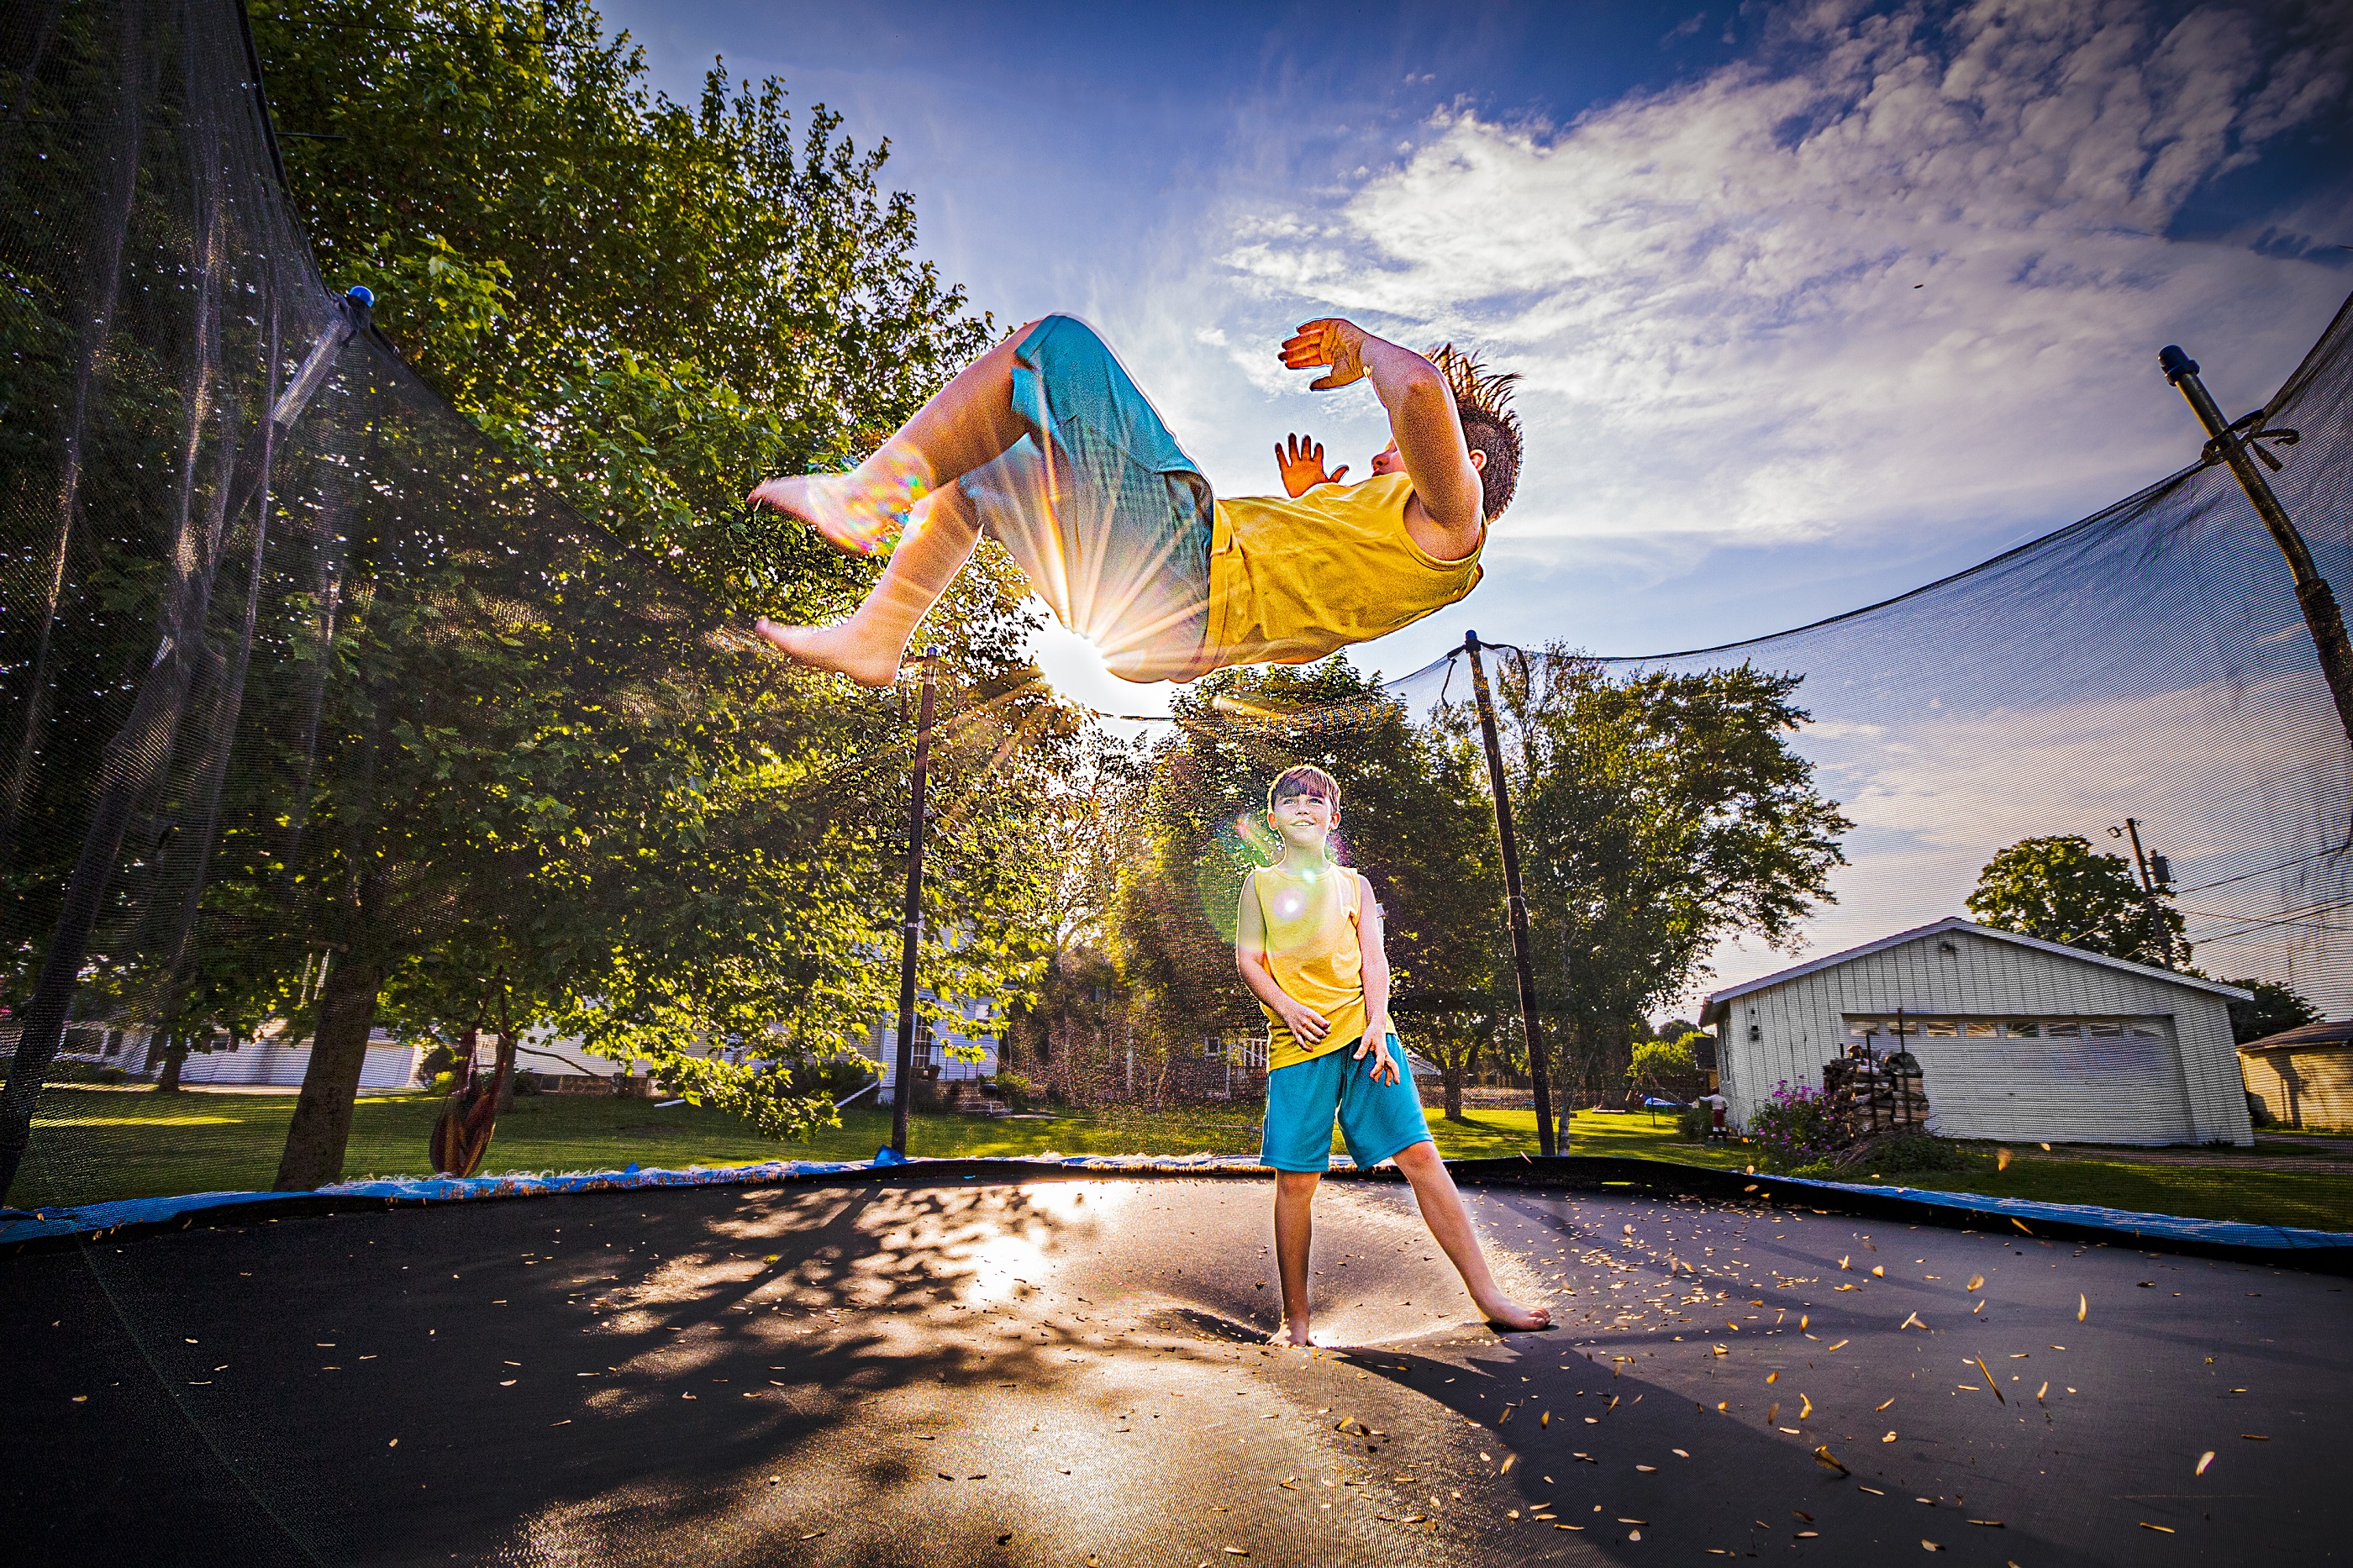 brothers-jumping-on-the-trampoline-in-backyard-2021-09-04-02-18-41-utc.jpg